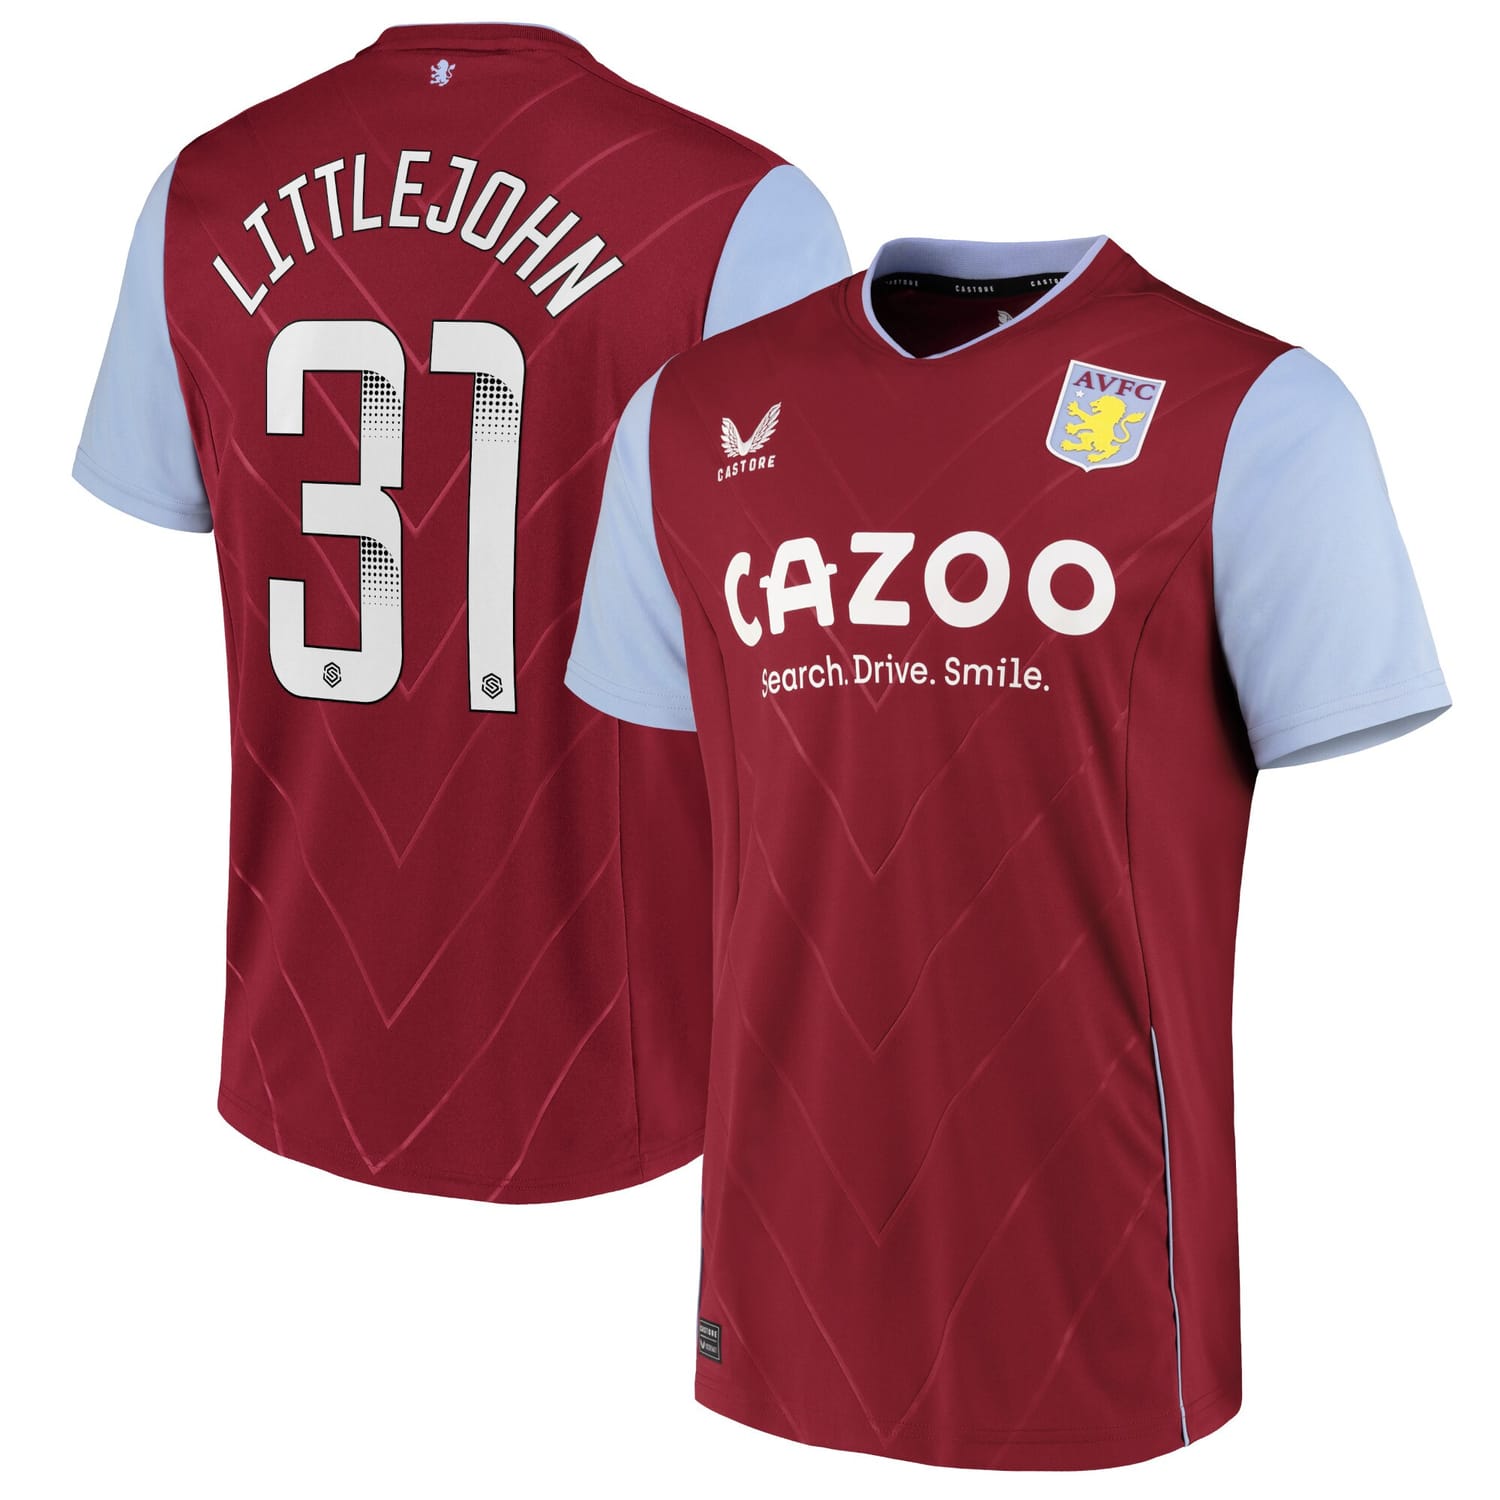 Premier League Aston Villa Home WSL Jersey Shirt 2022-23 player Ruesha Littlejohn 31 printing for Men